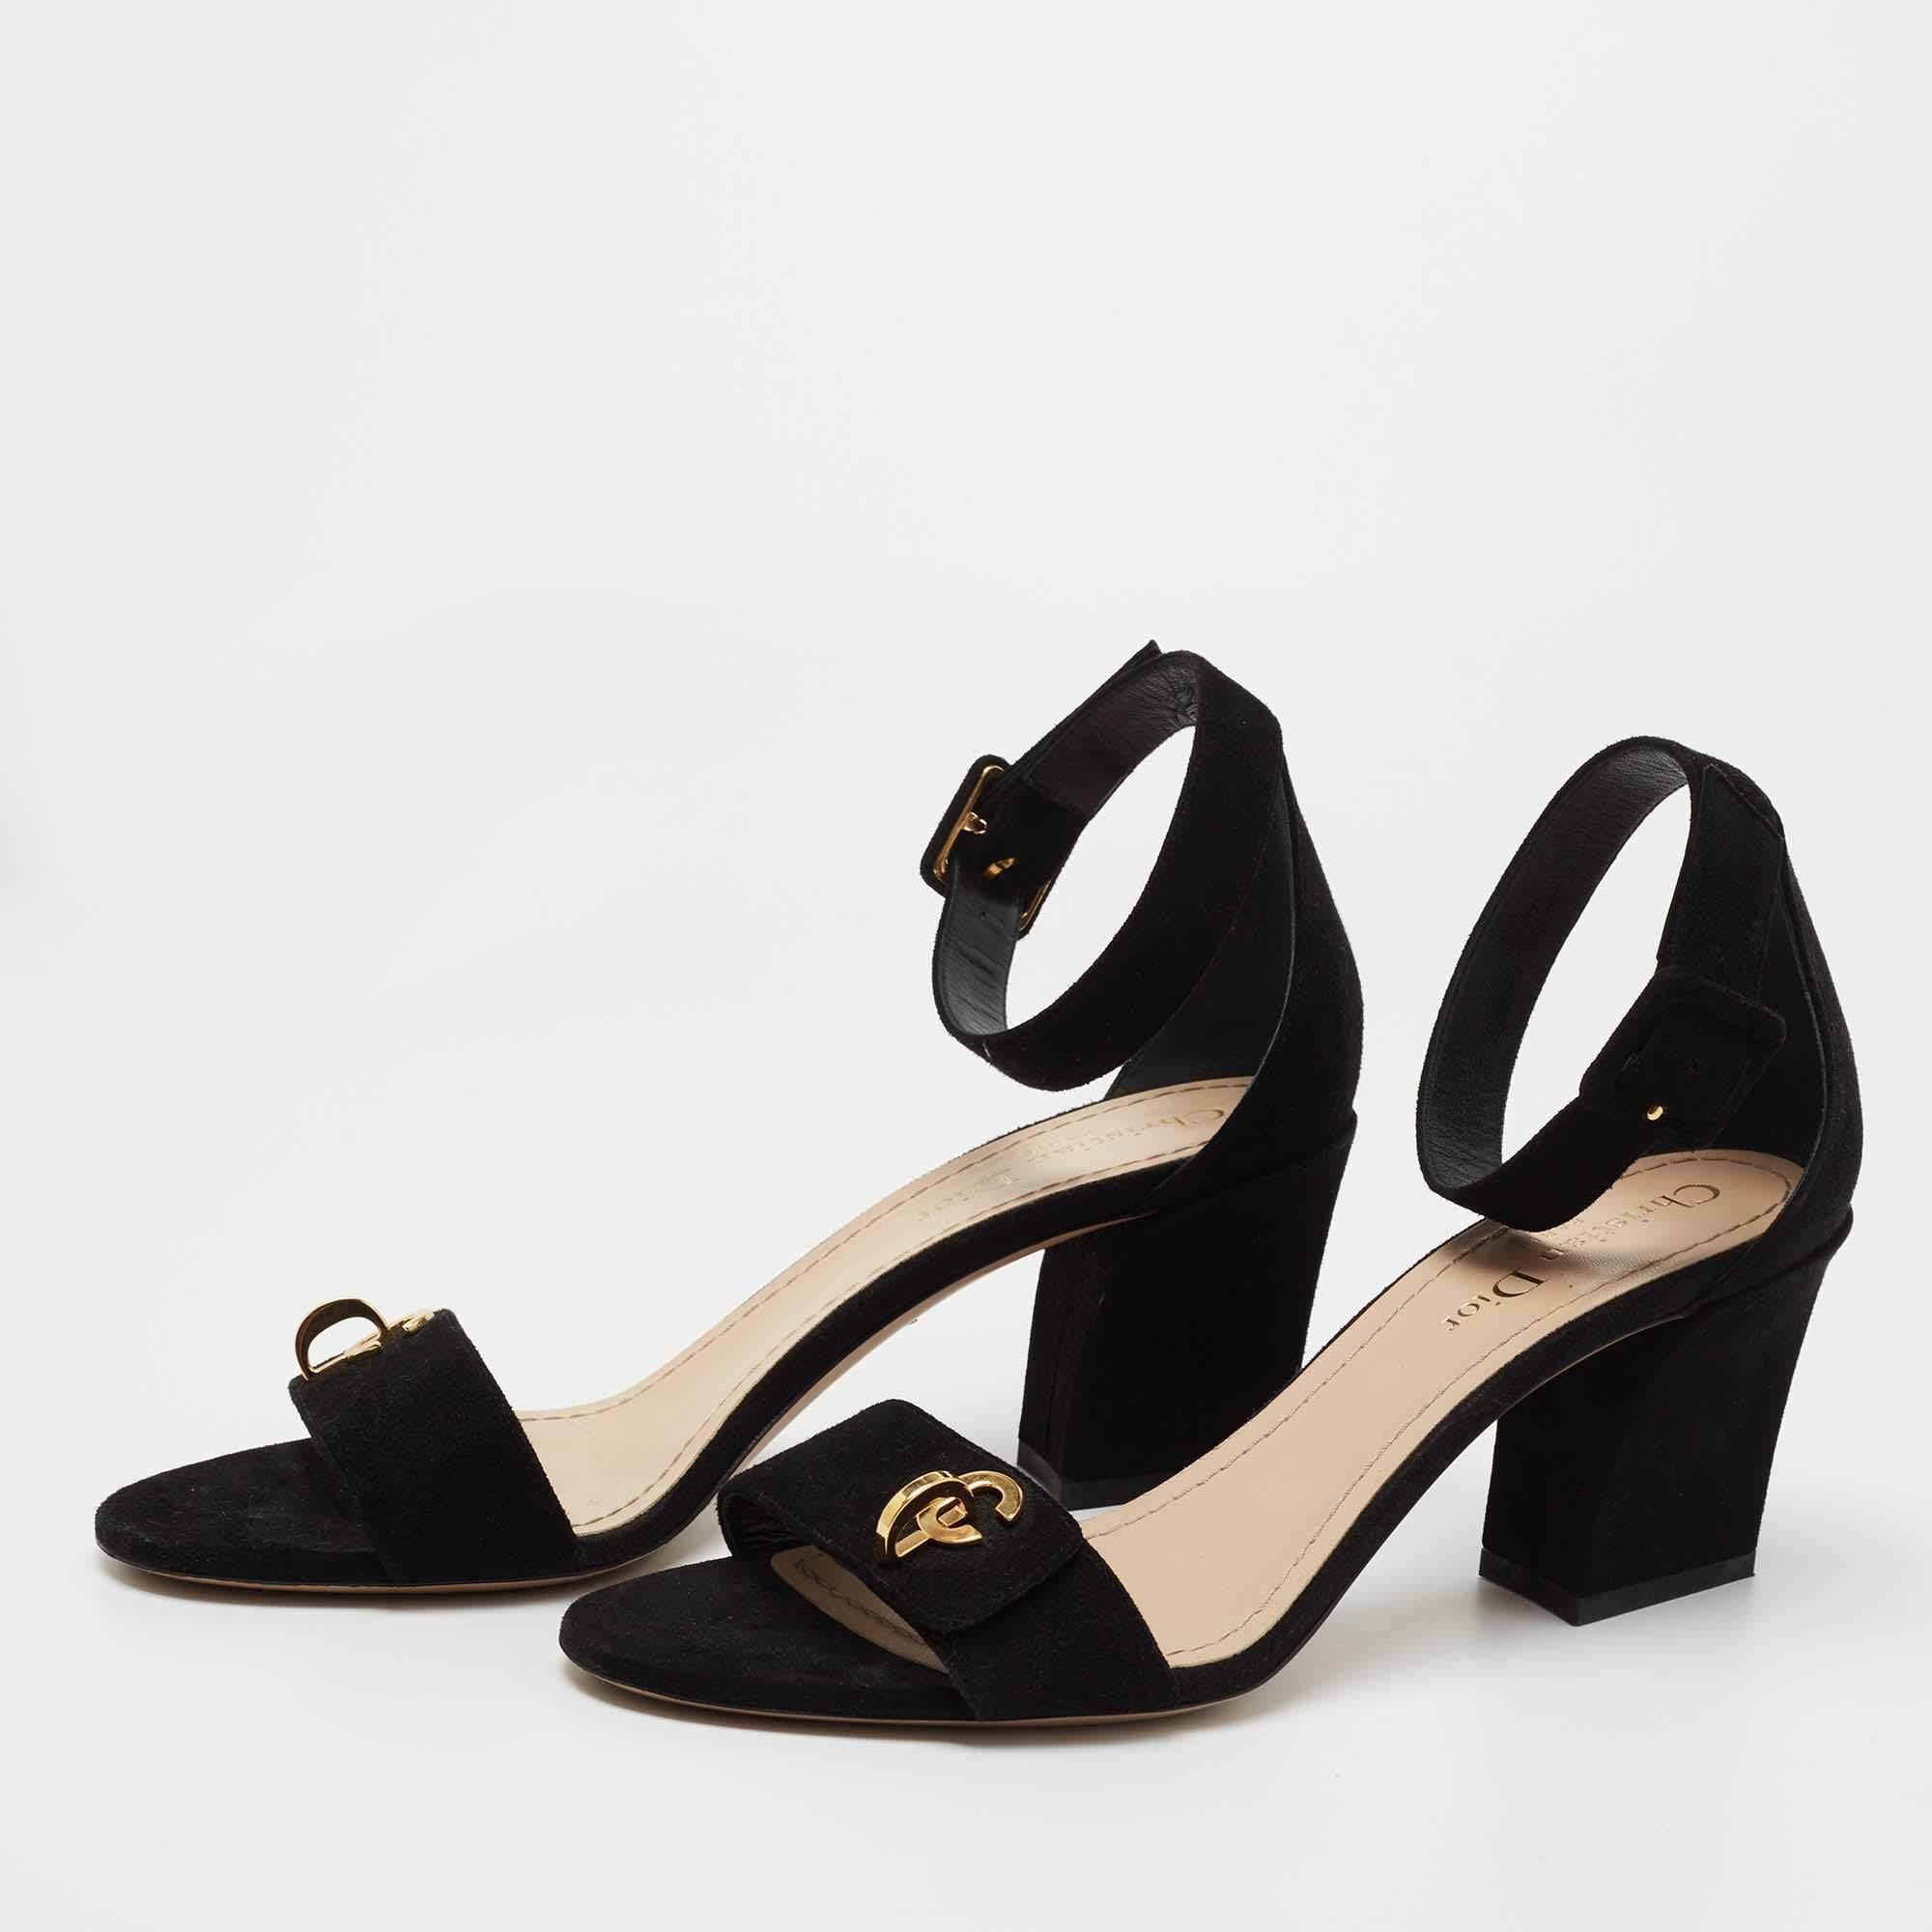 Dior Black Suede C'est Ankle Strap Sandals Size 39 In Good Condition For Sale In Dubai, Al Qouz 2